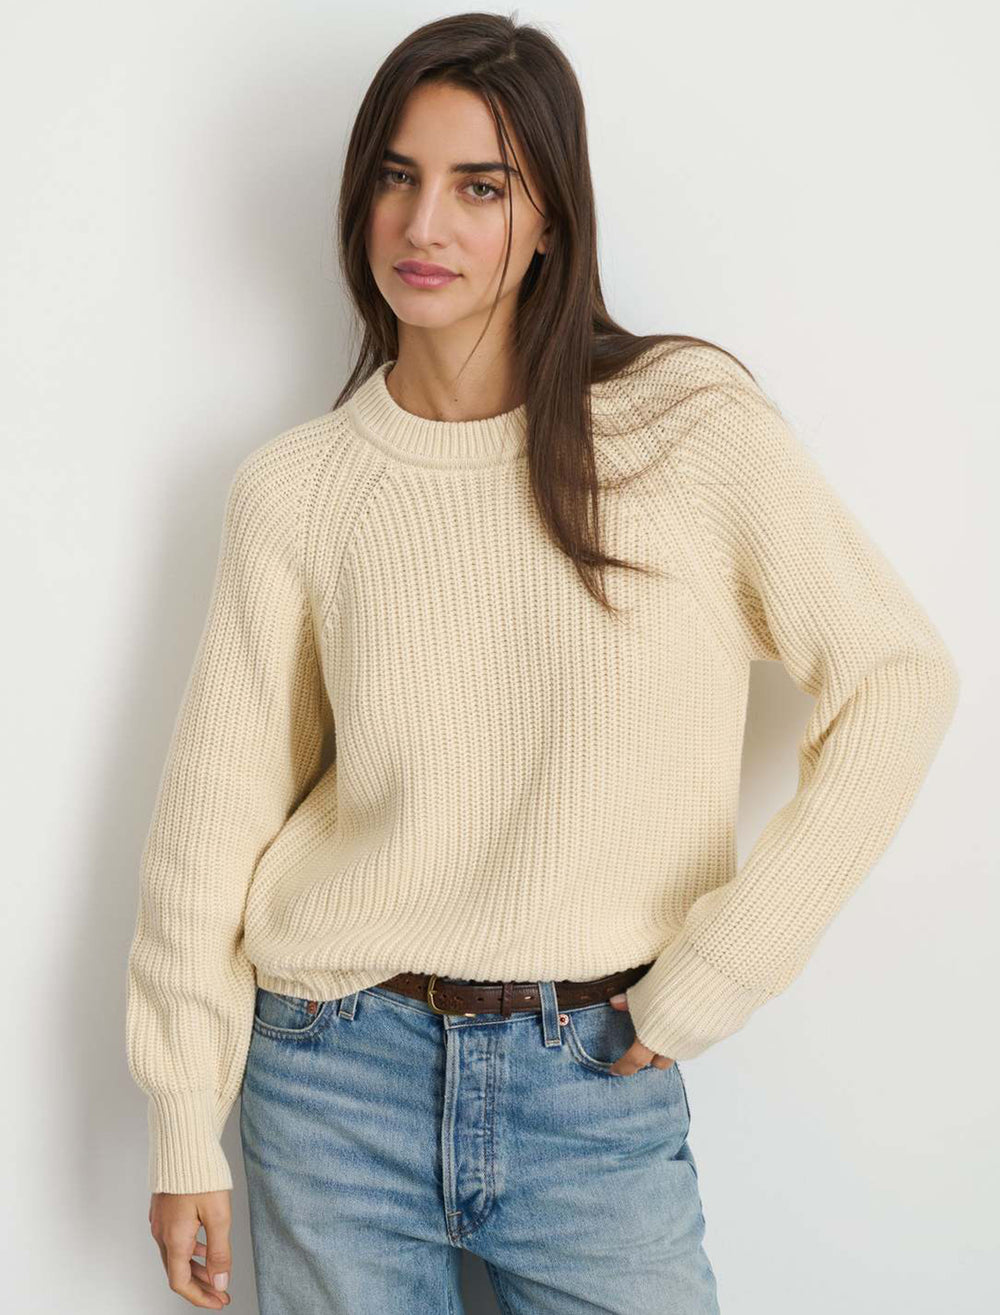 Model wearing Alex Mill's Amalie Pullover Sweater in Ivory.